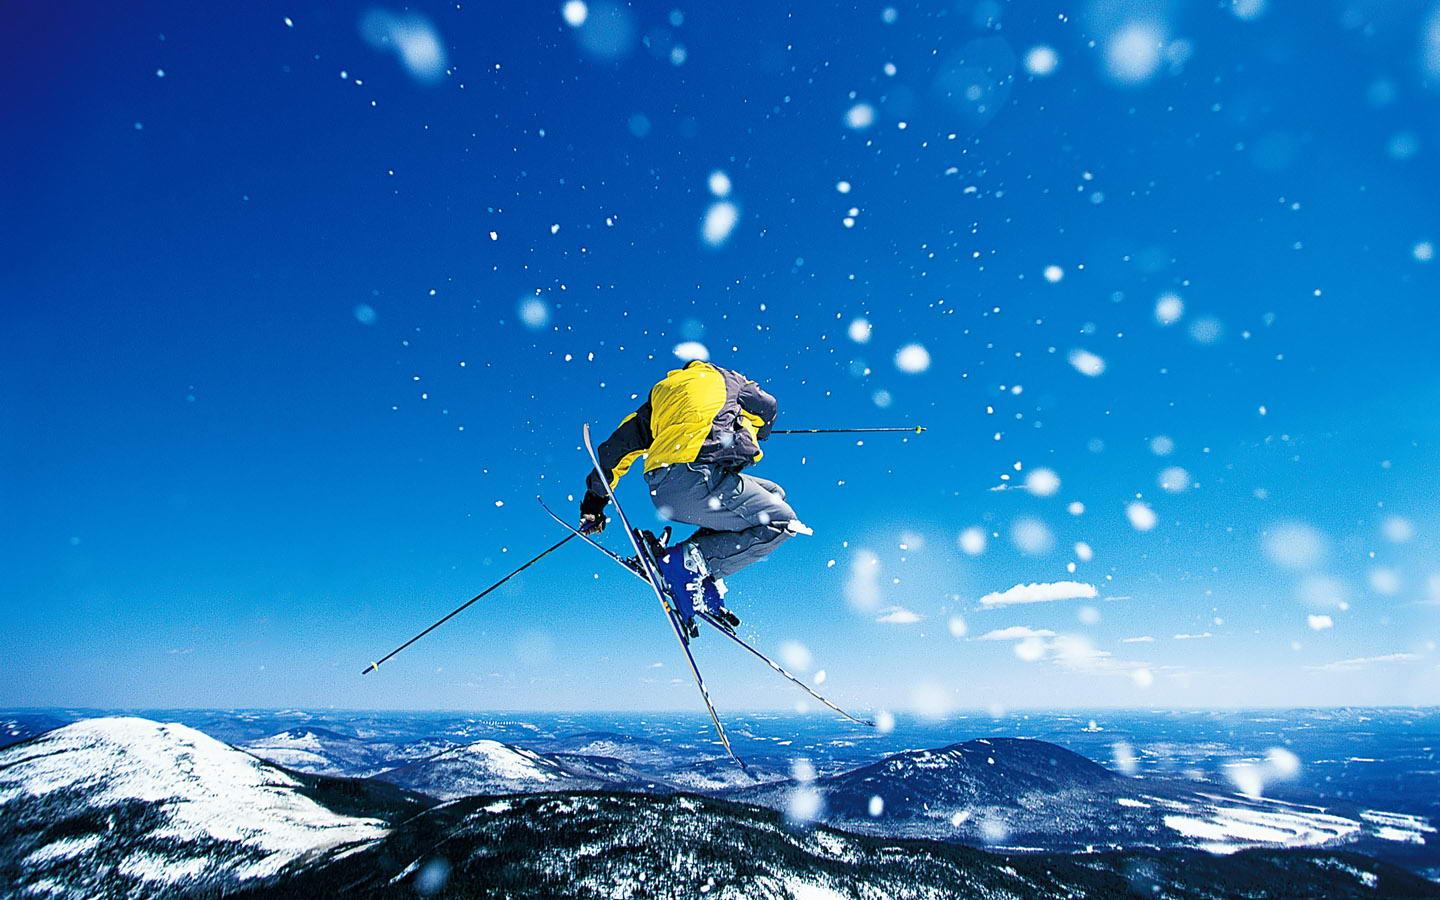 extreme hd wallpaper,freestyle ski fahren,ski,schnee,extremsport,himmel